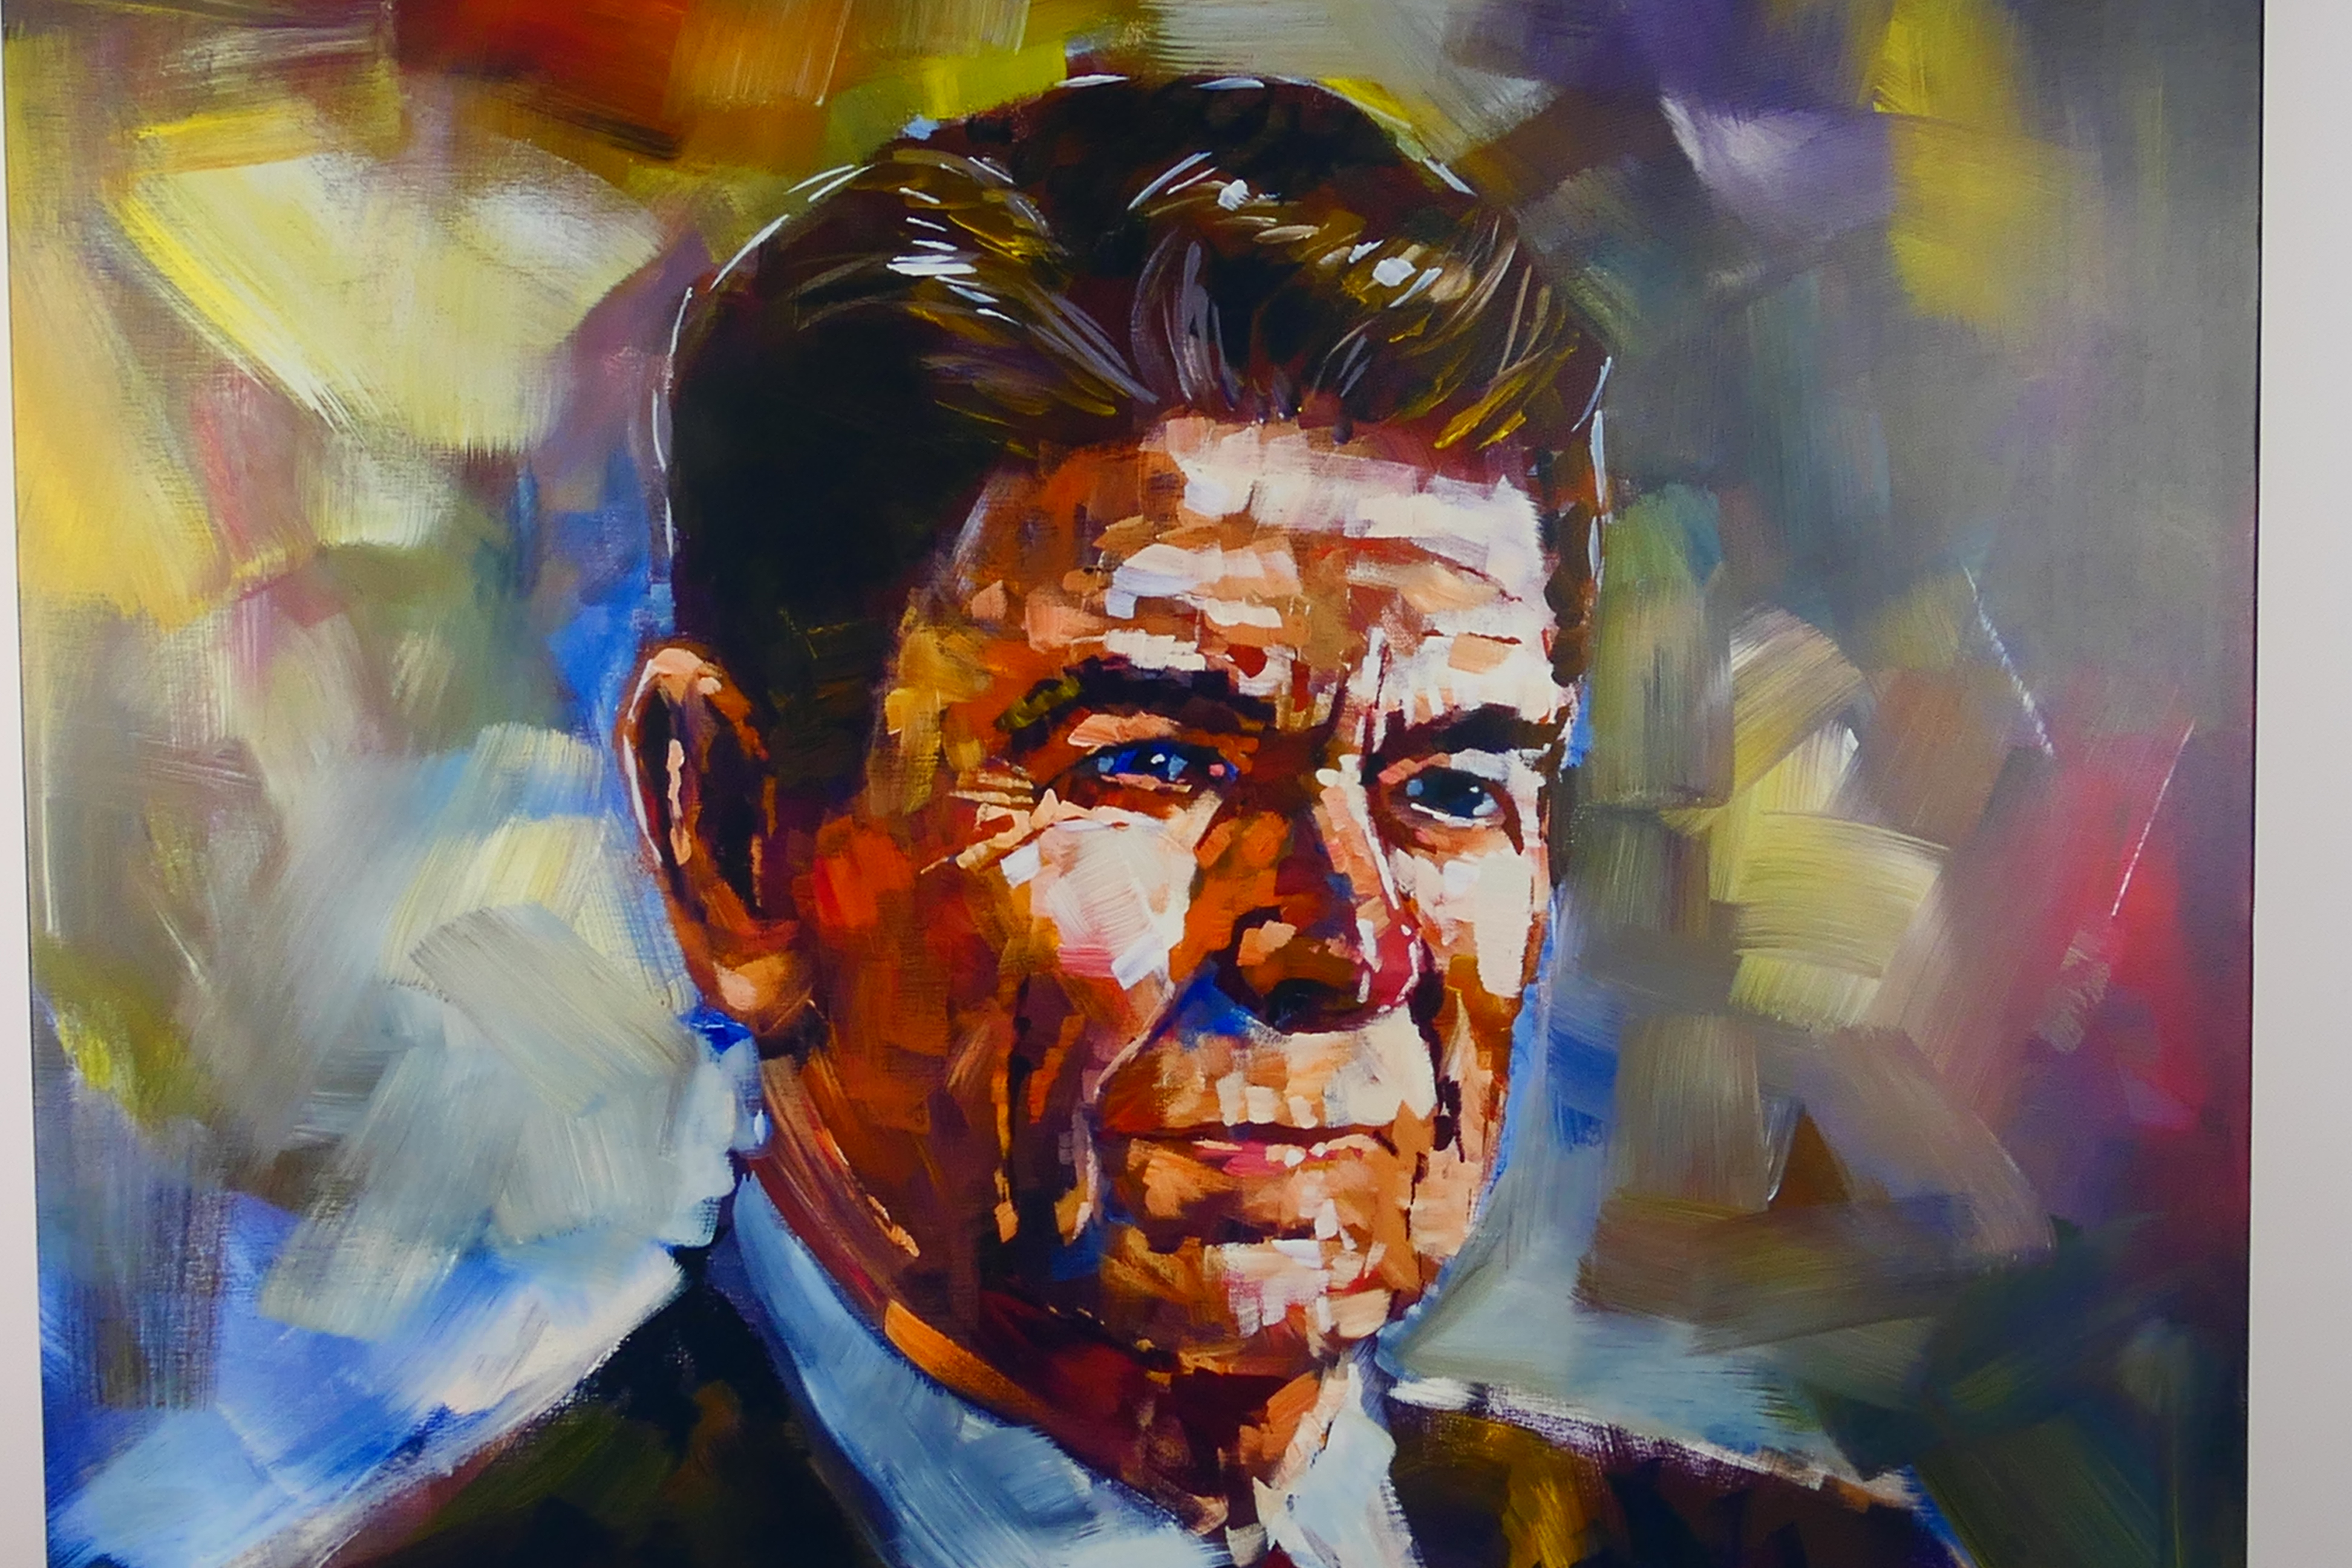 A large canvas print portrait after Steve Penley depicting Ronald Reagan, - Image 2 of 3